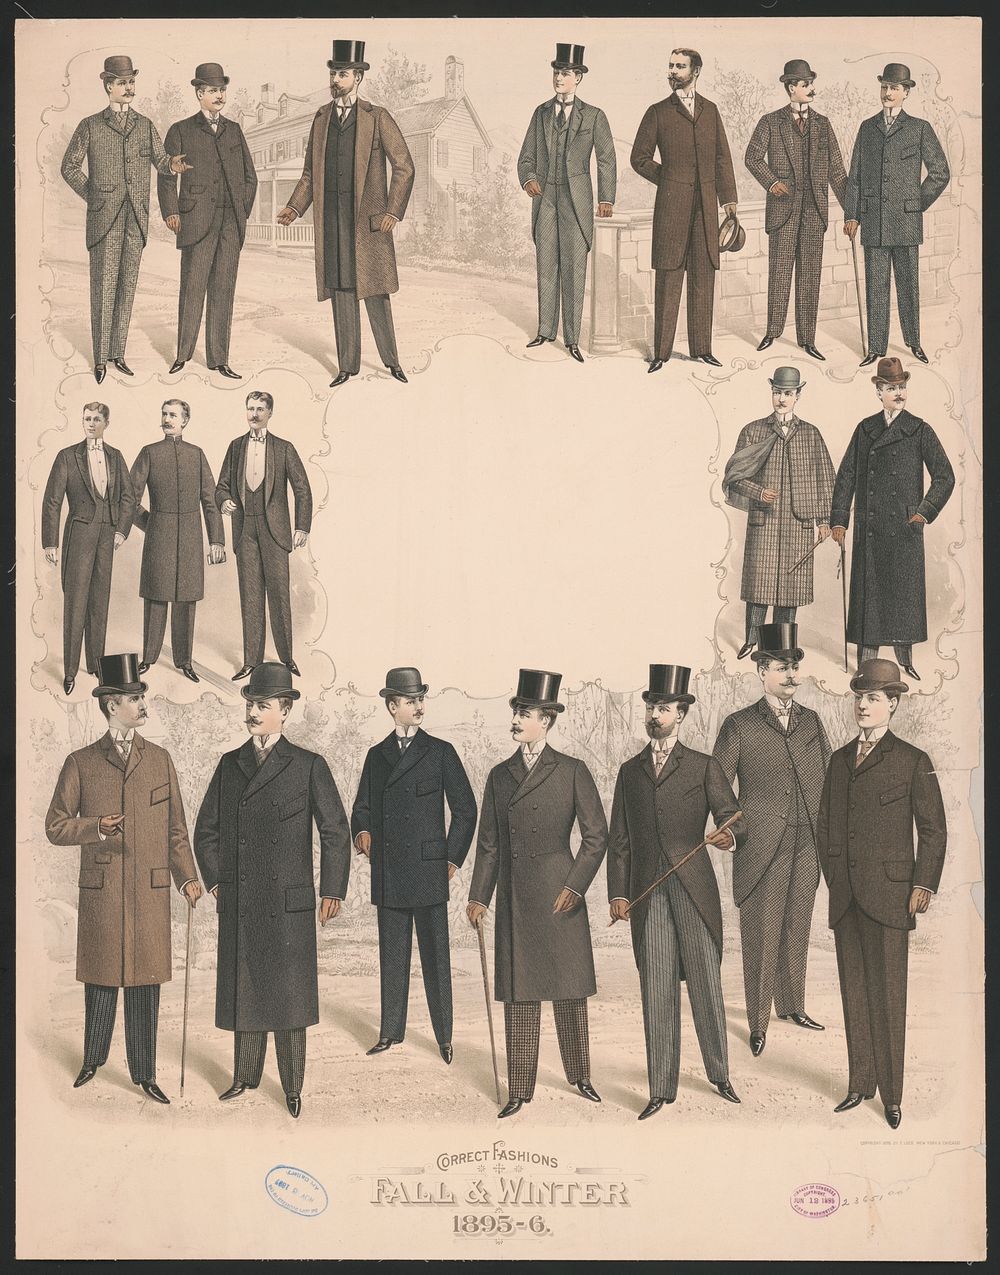 Correct fashions, fall & winter 1895-6